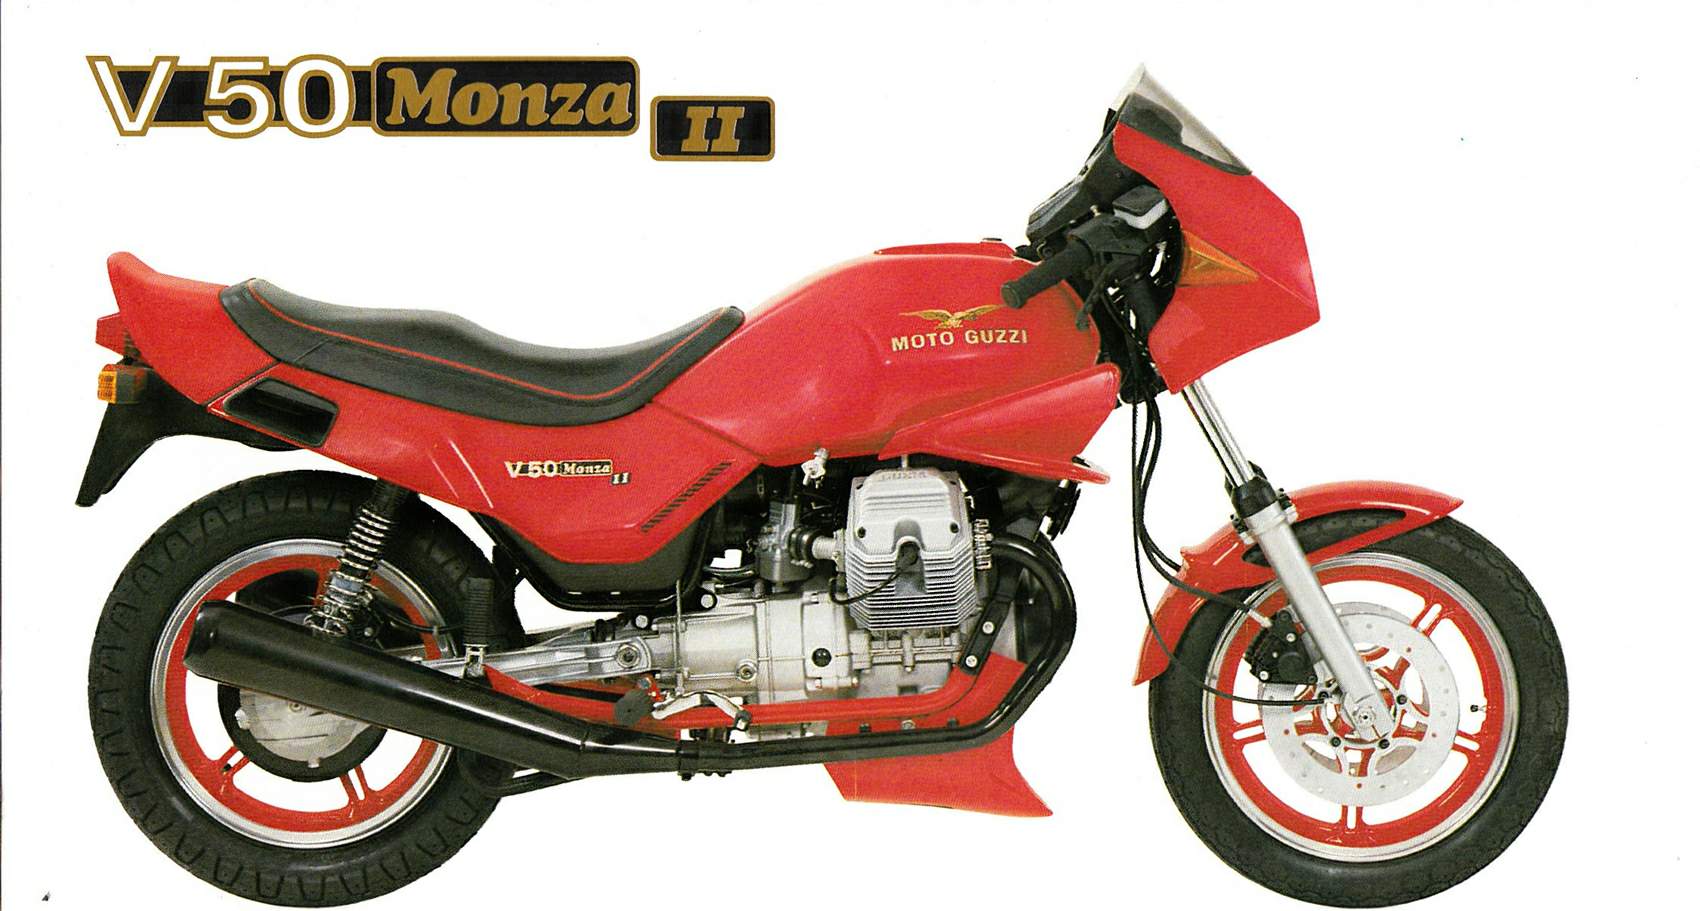 Moto Guzzi V 50 Monza II (1983-84) especificaciones técnicas